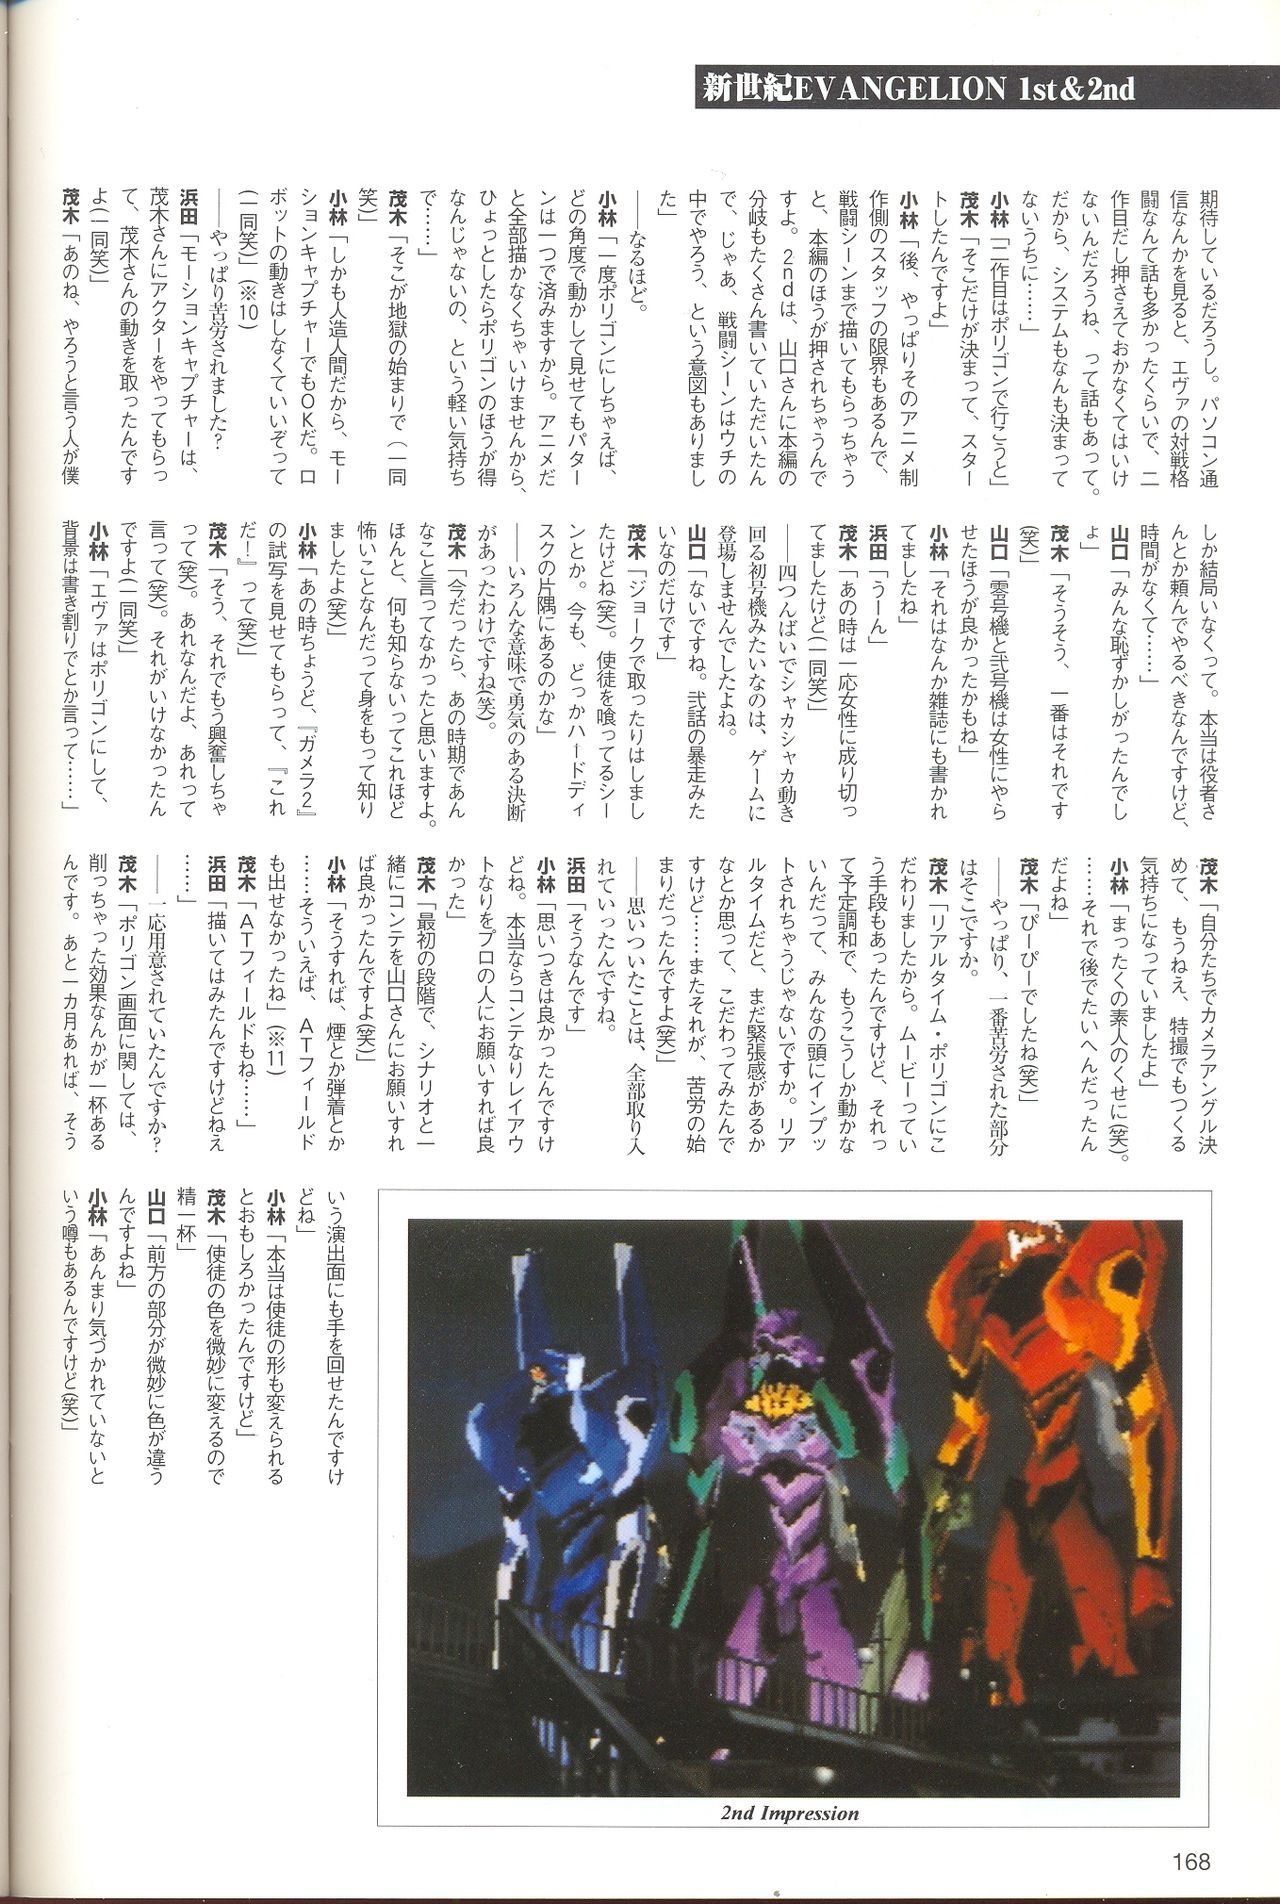 Neon Genesis Evangelion - 2nd Impression Sega Saturn Perfect Guide 167